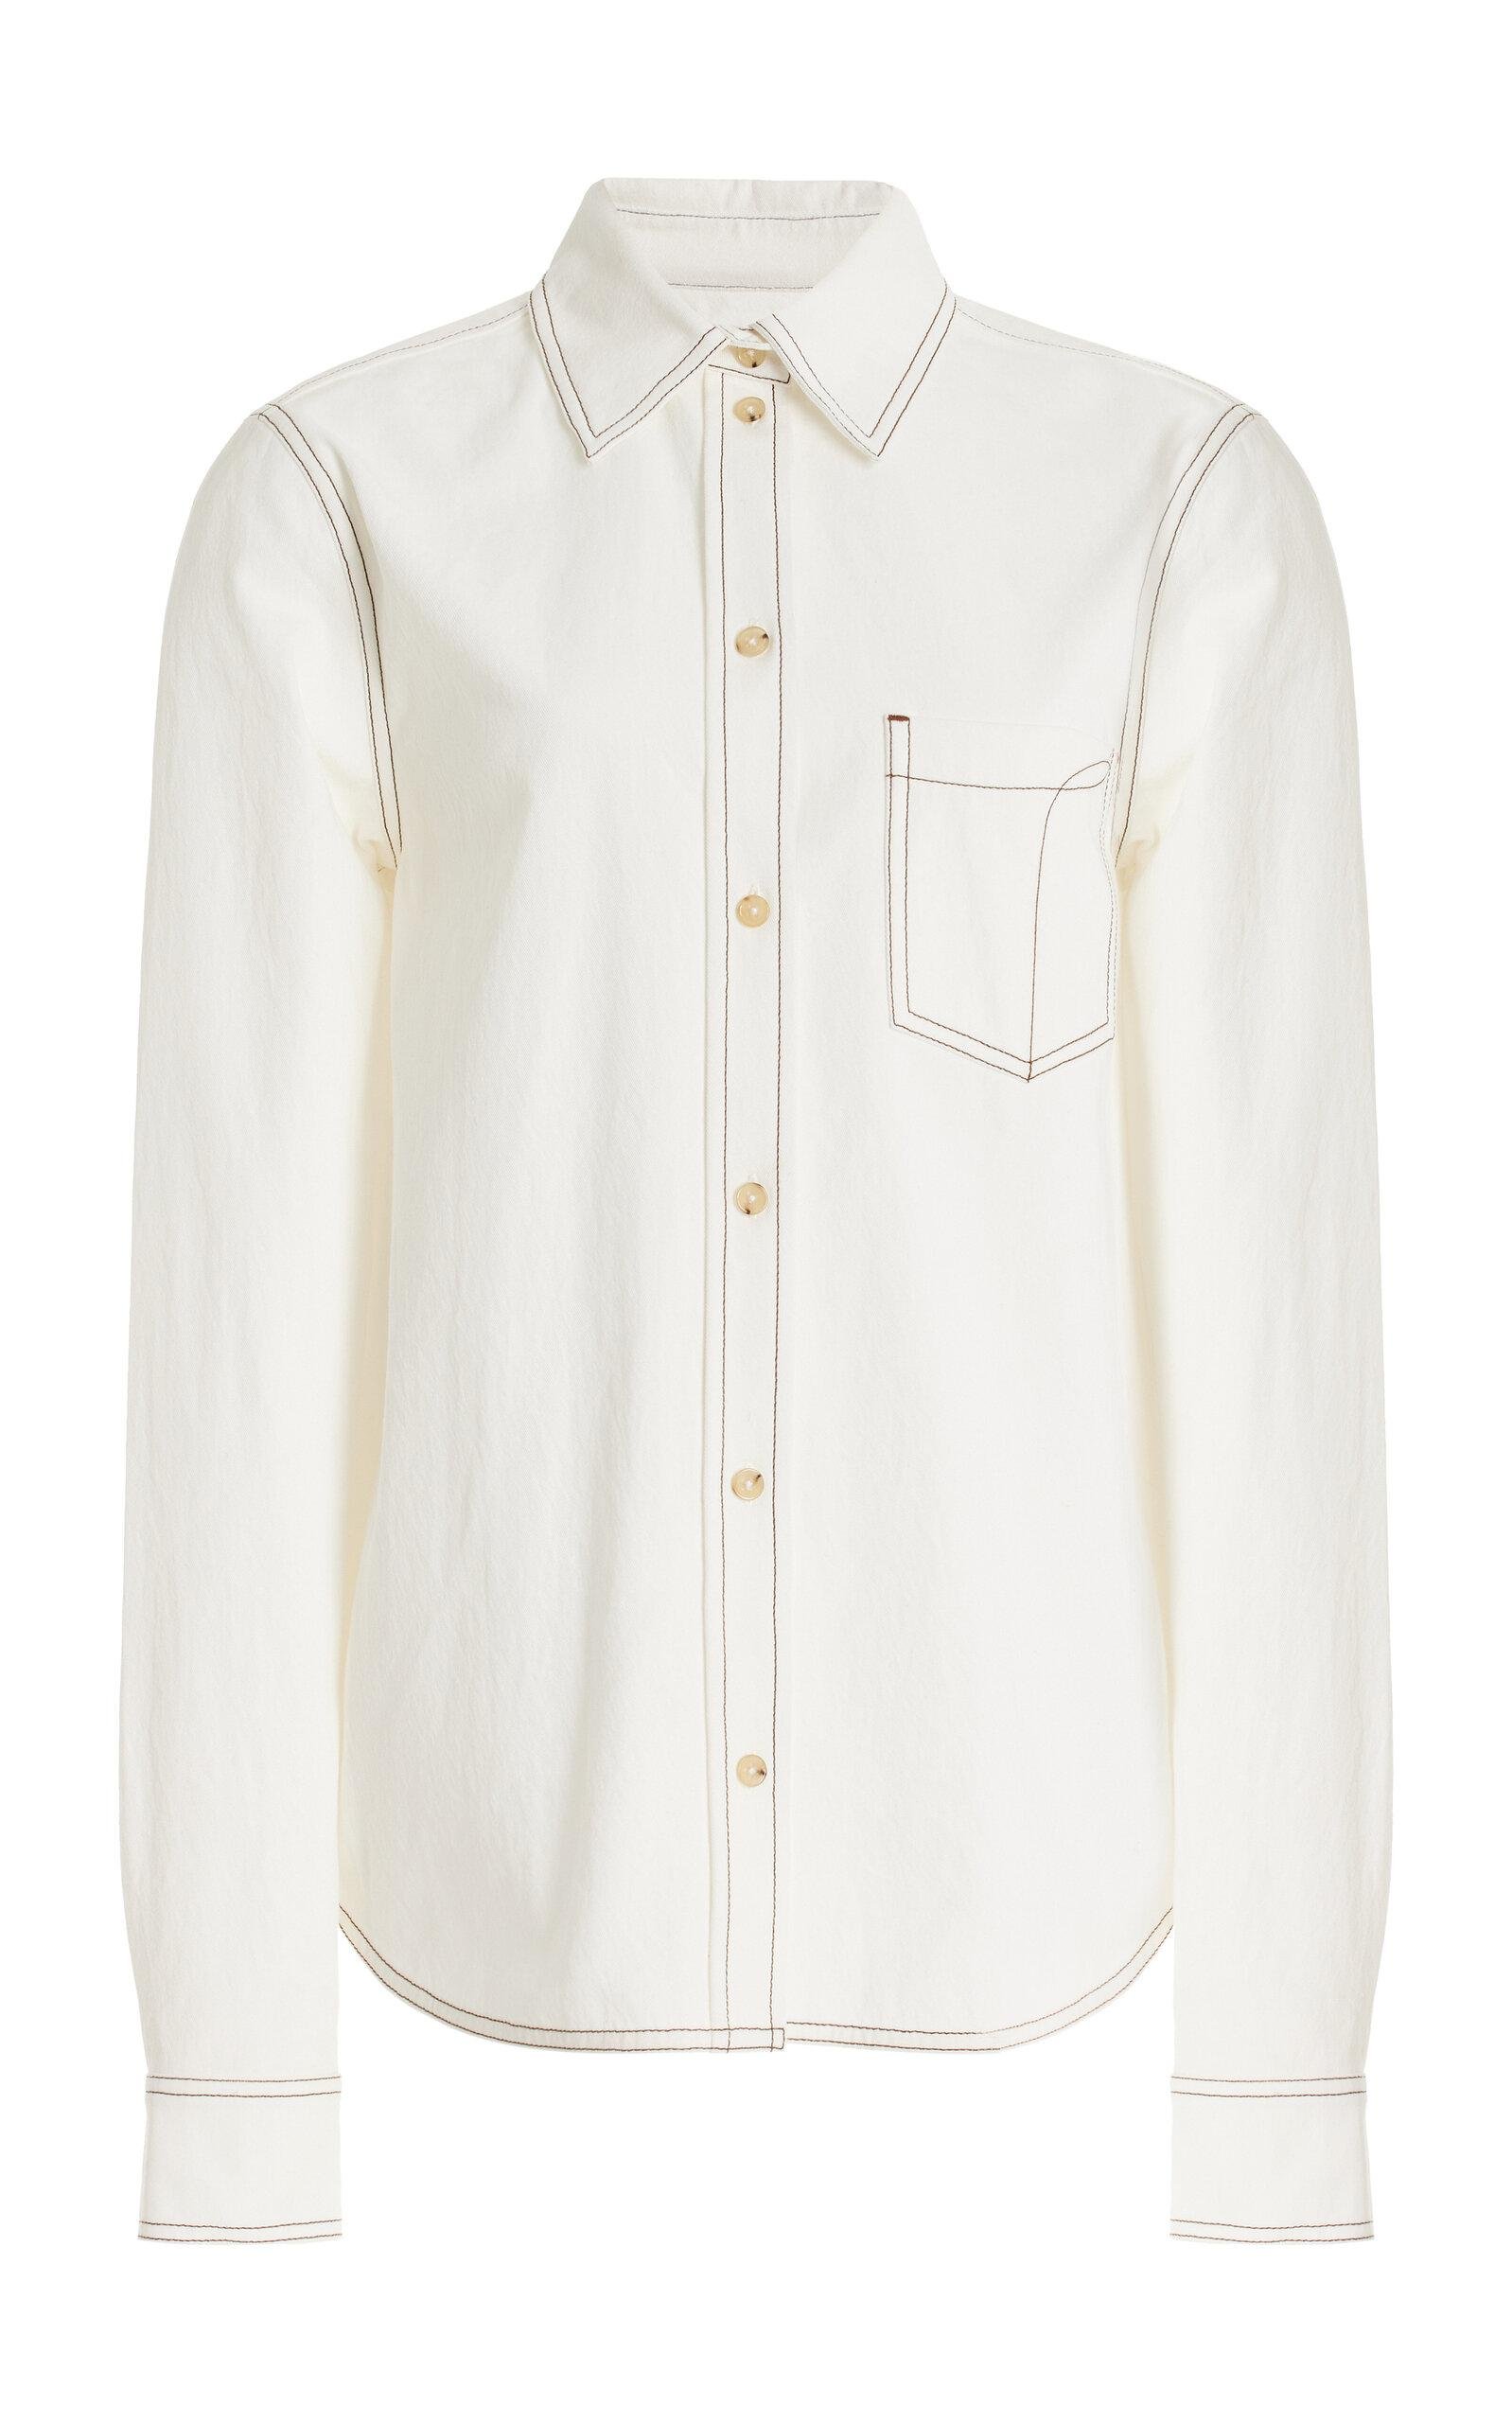 Toteme - Petite Tumbled Organic Cotton Shirt - White - FR 40 - Moda Operandi by TOTEME